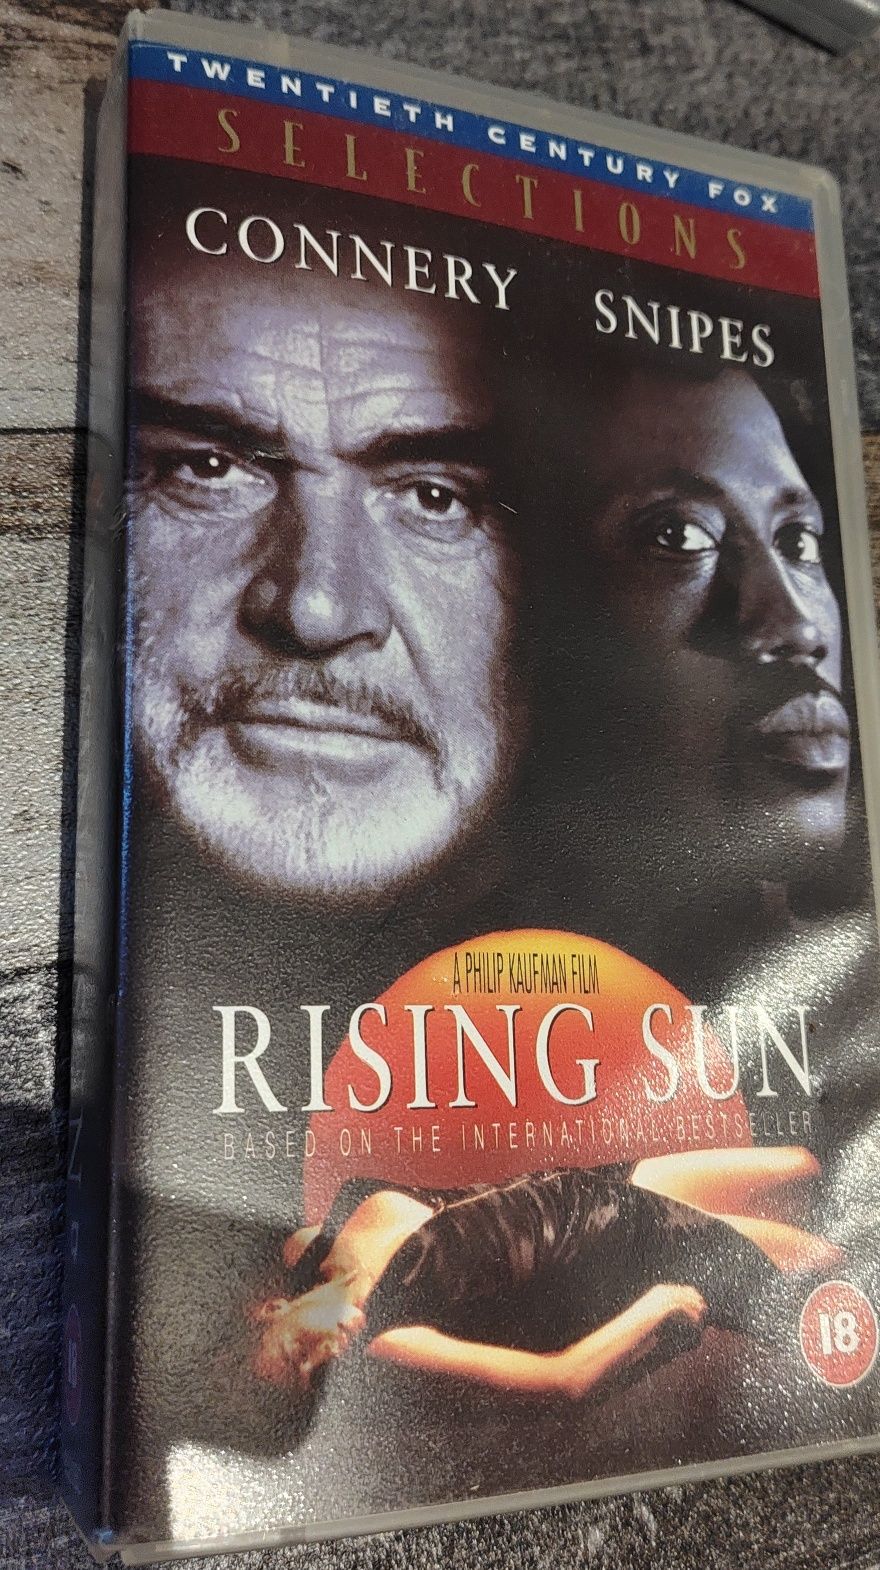 Film VHS Rising Sun Angielski język.